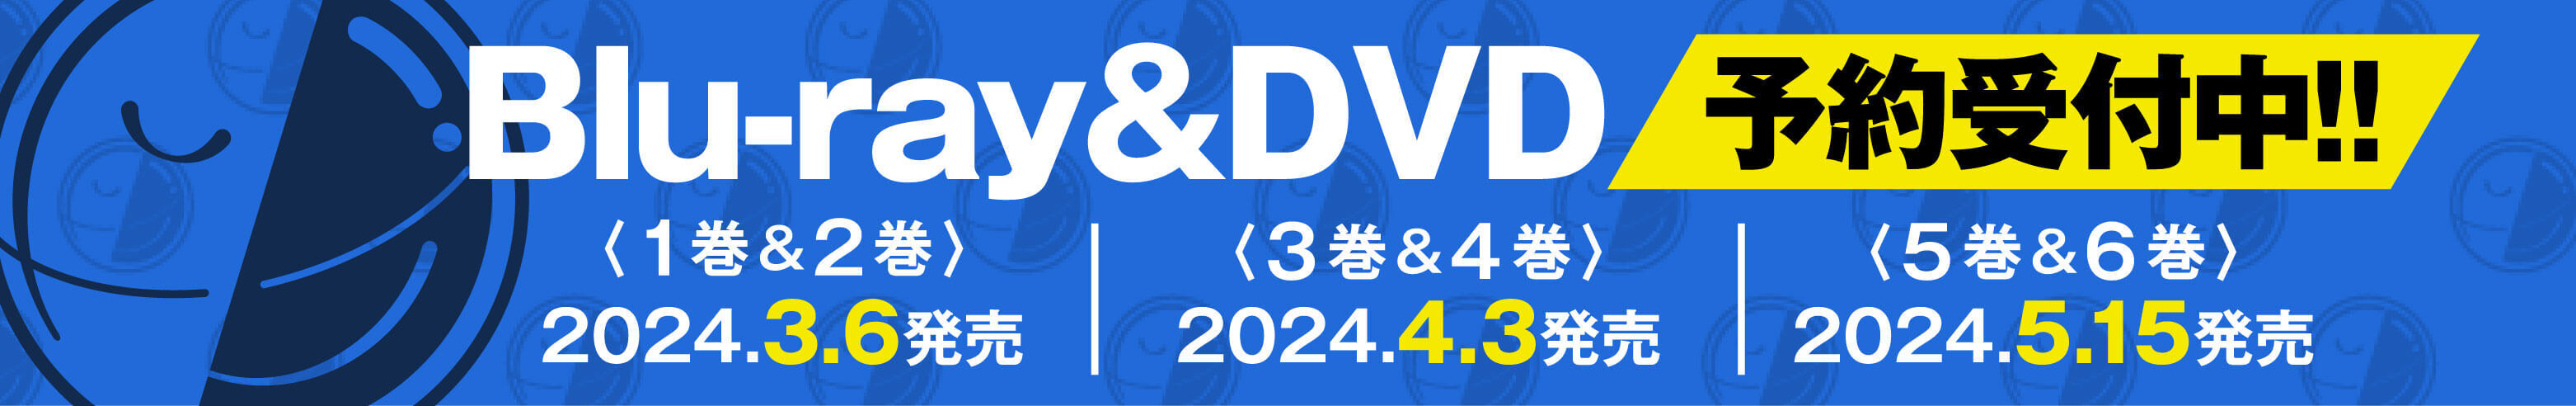 「AD-LIVE 2023」Blu-ray&DVD予約受付中